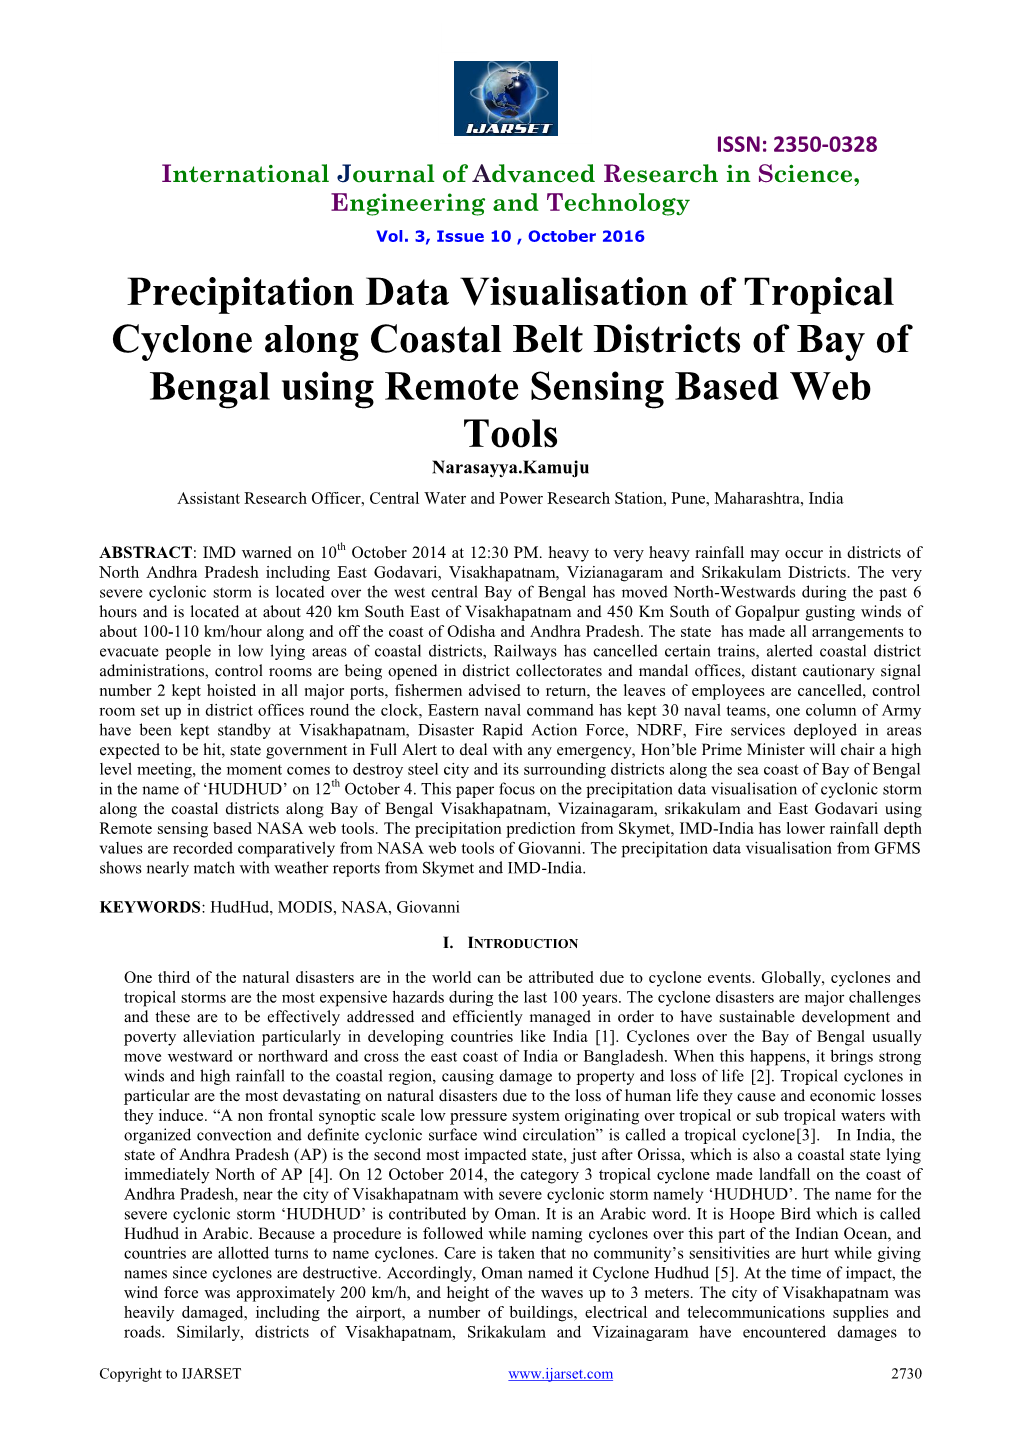 Precipitation Data Visualisation of Tropical Cyclone Along Coastal Belt